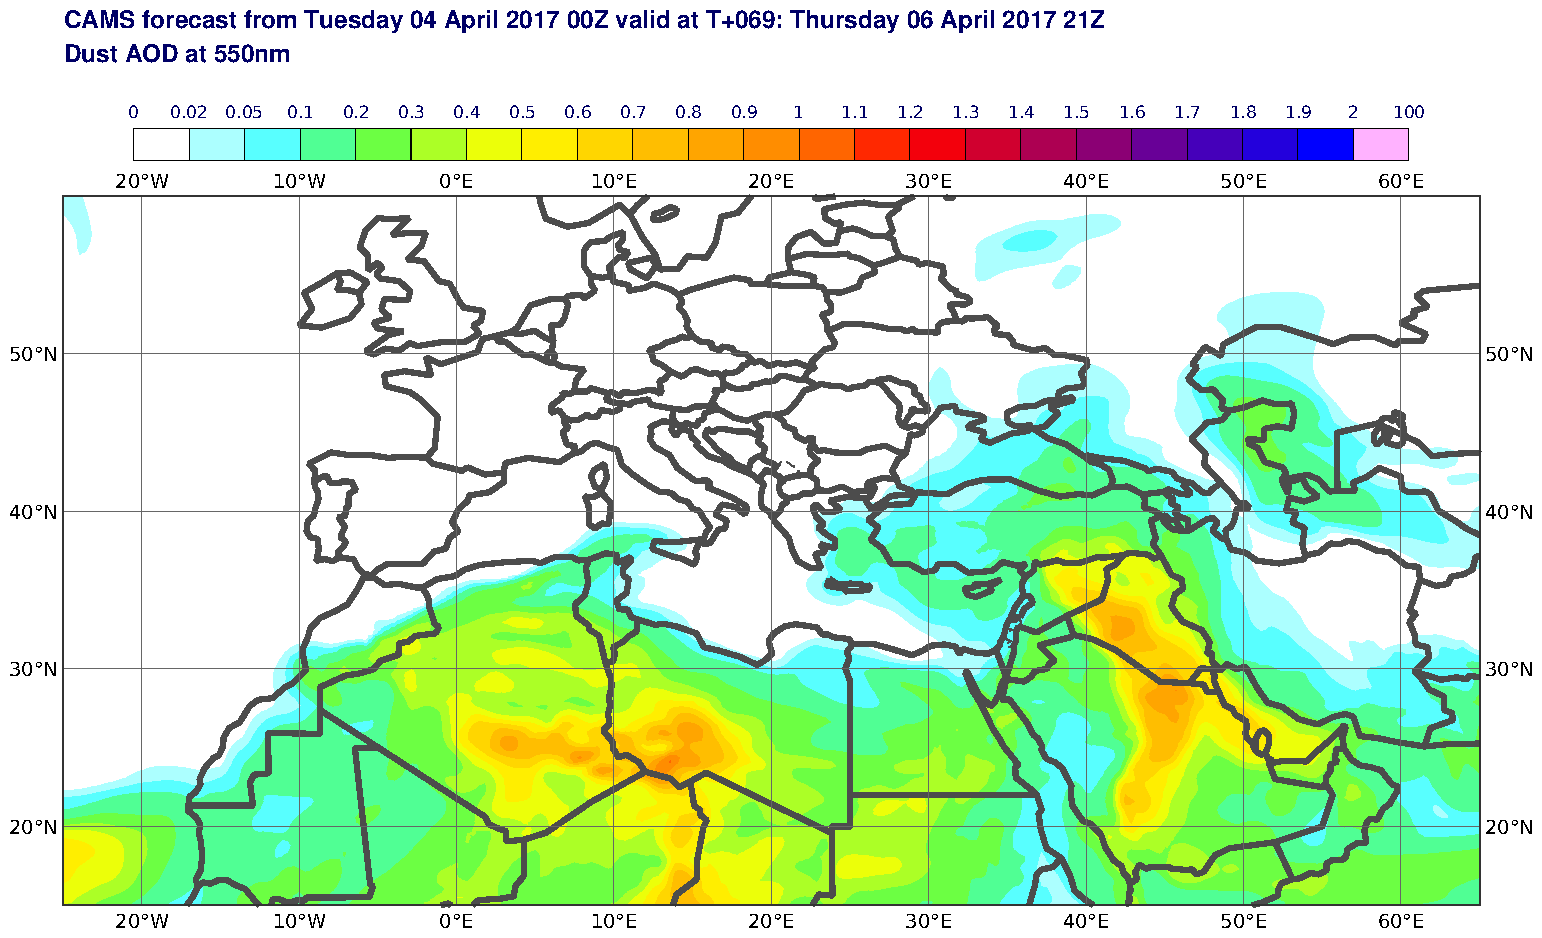 Dust AOD at 550nm valid at T69 - 2017-04-06 21:00